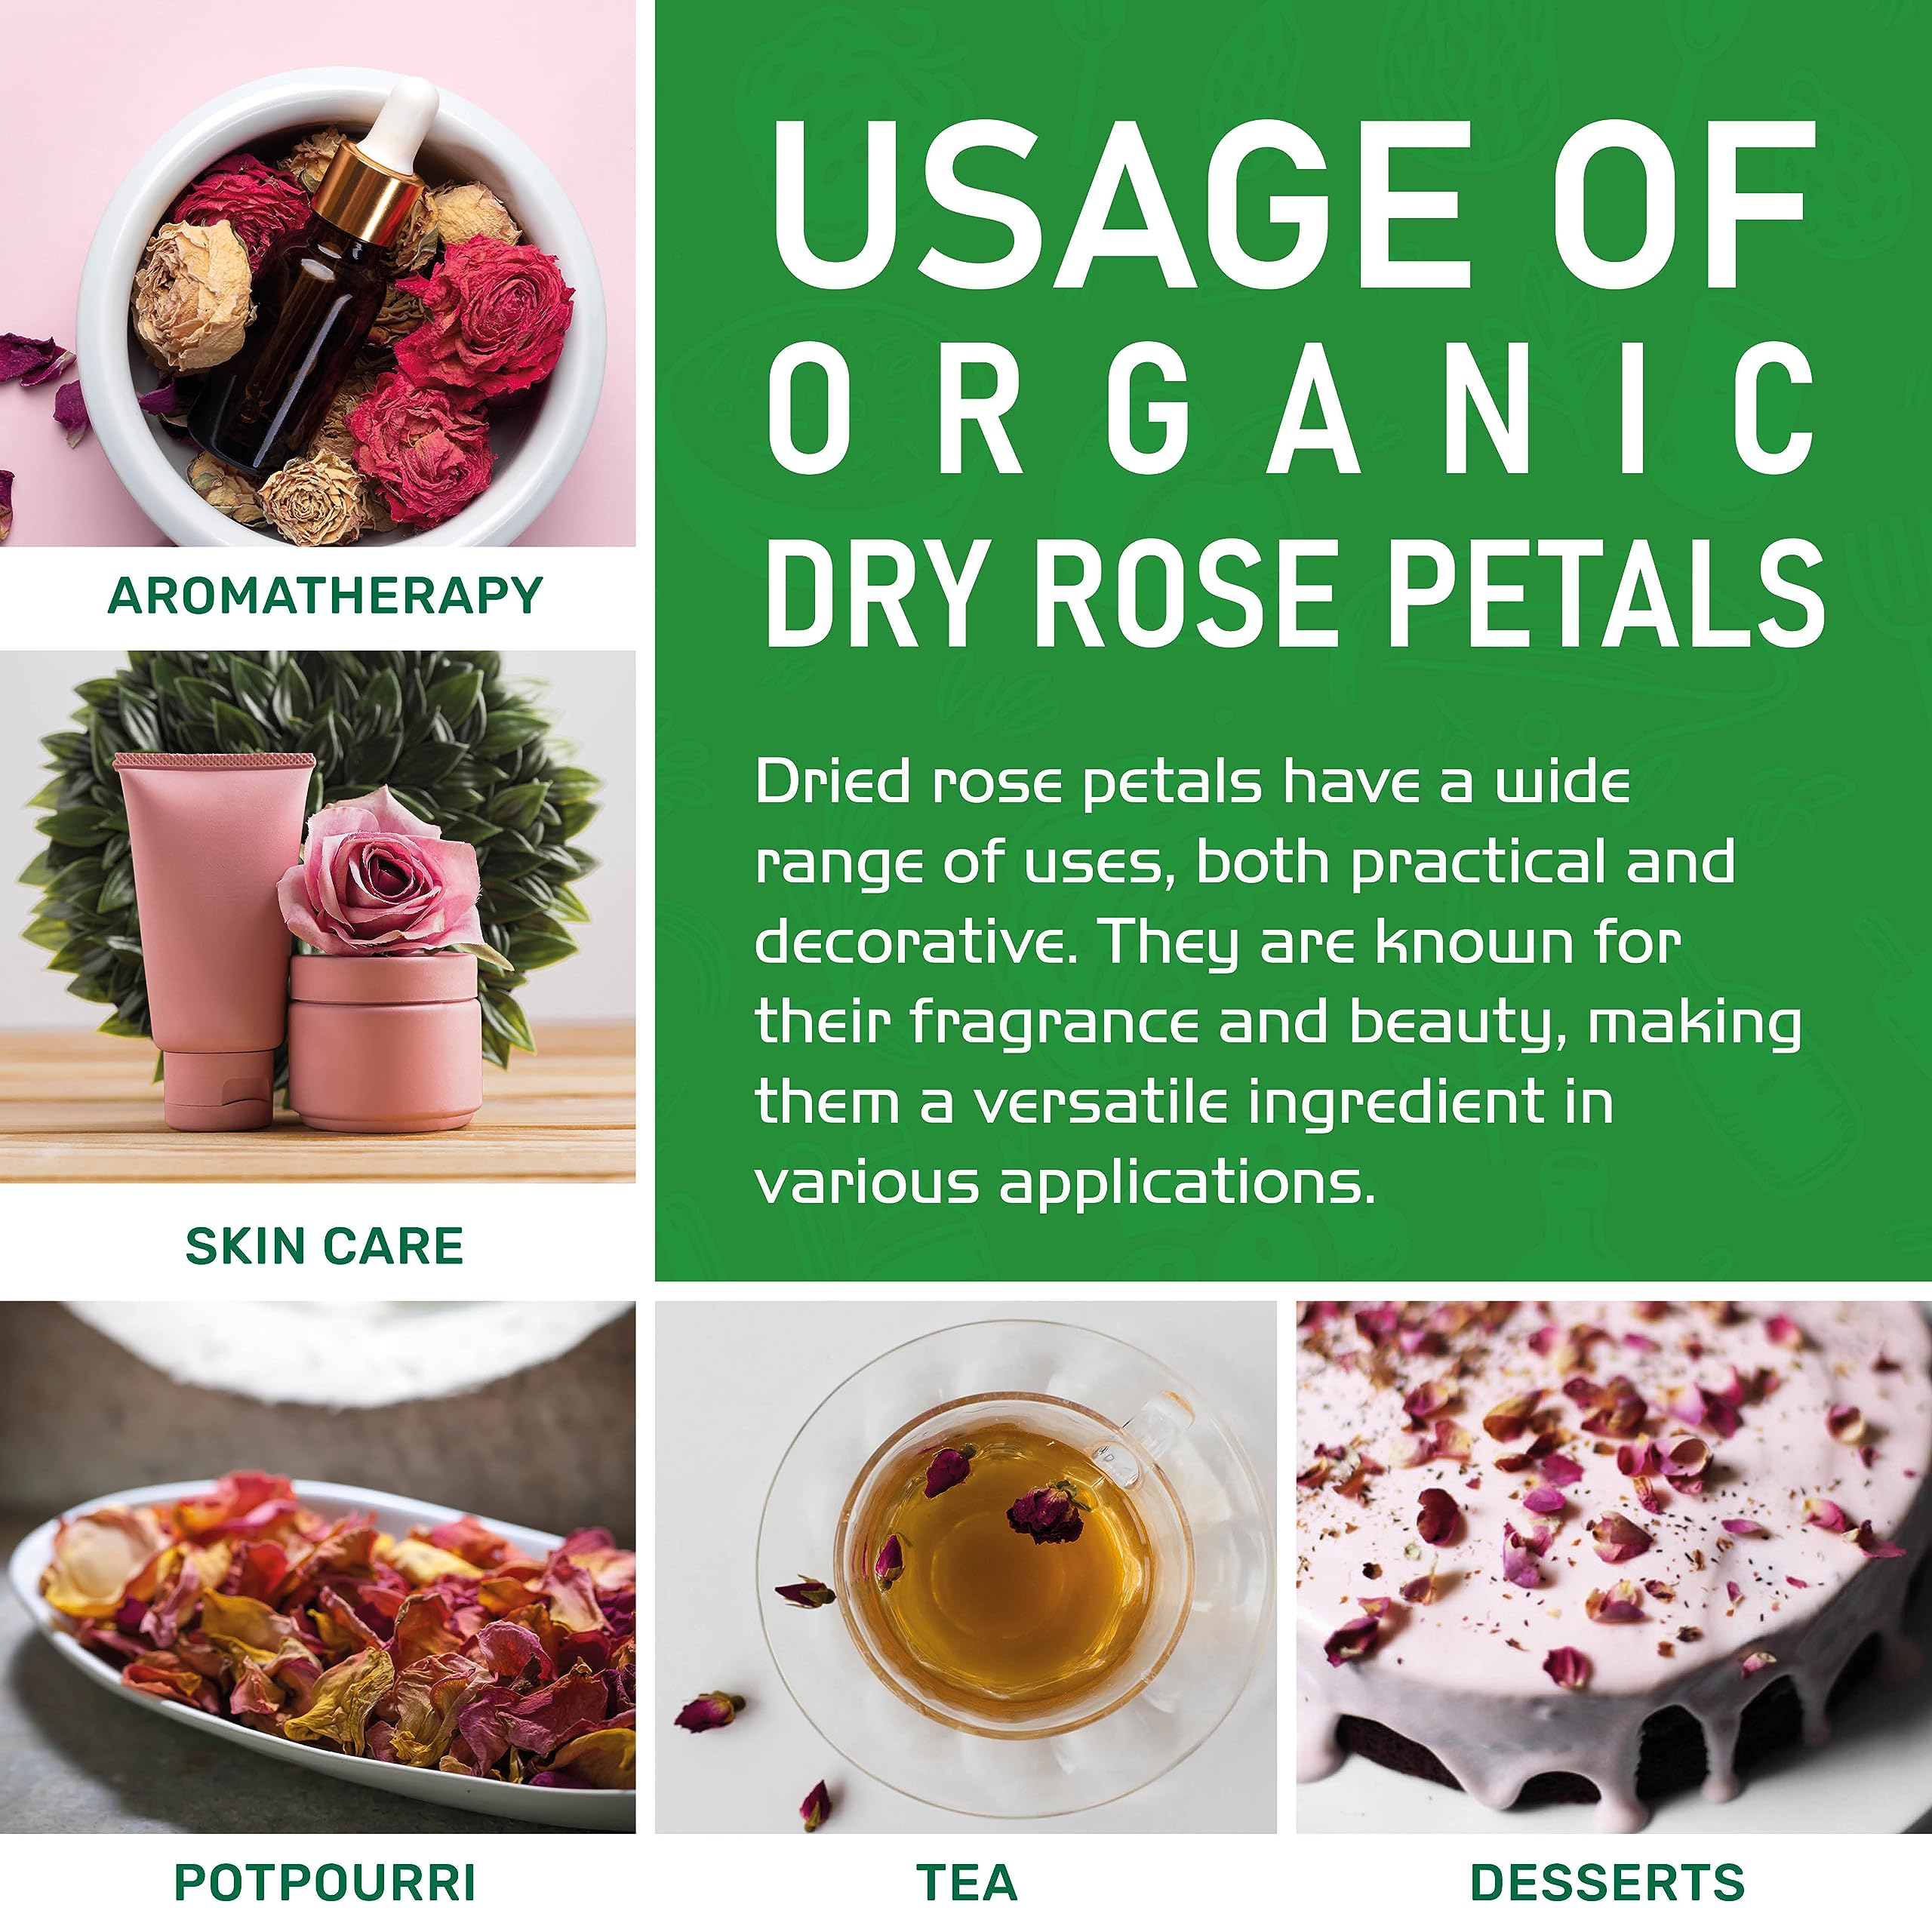 Jiva USDA Organic Dried Red Rose Petals 7 Oz (200g) Large Bag - Food Grade, Edible Flowers - Use in Tea, Baking, Making Rose Water, Crafting, Wedding Confetti